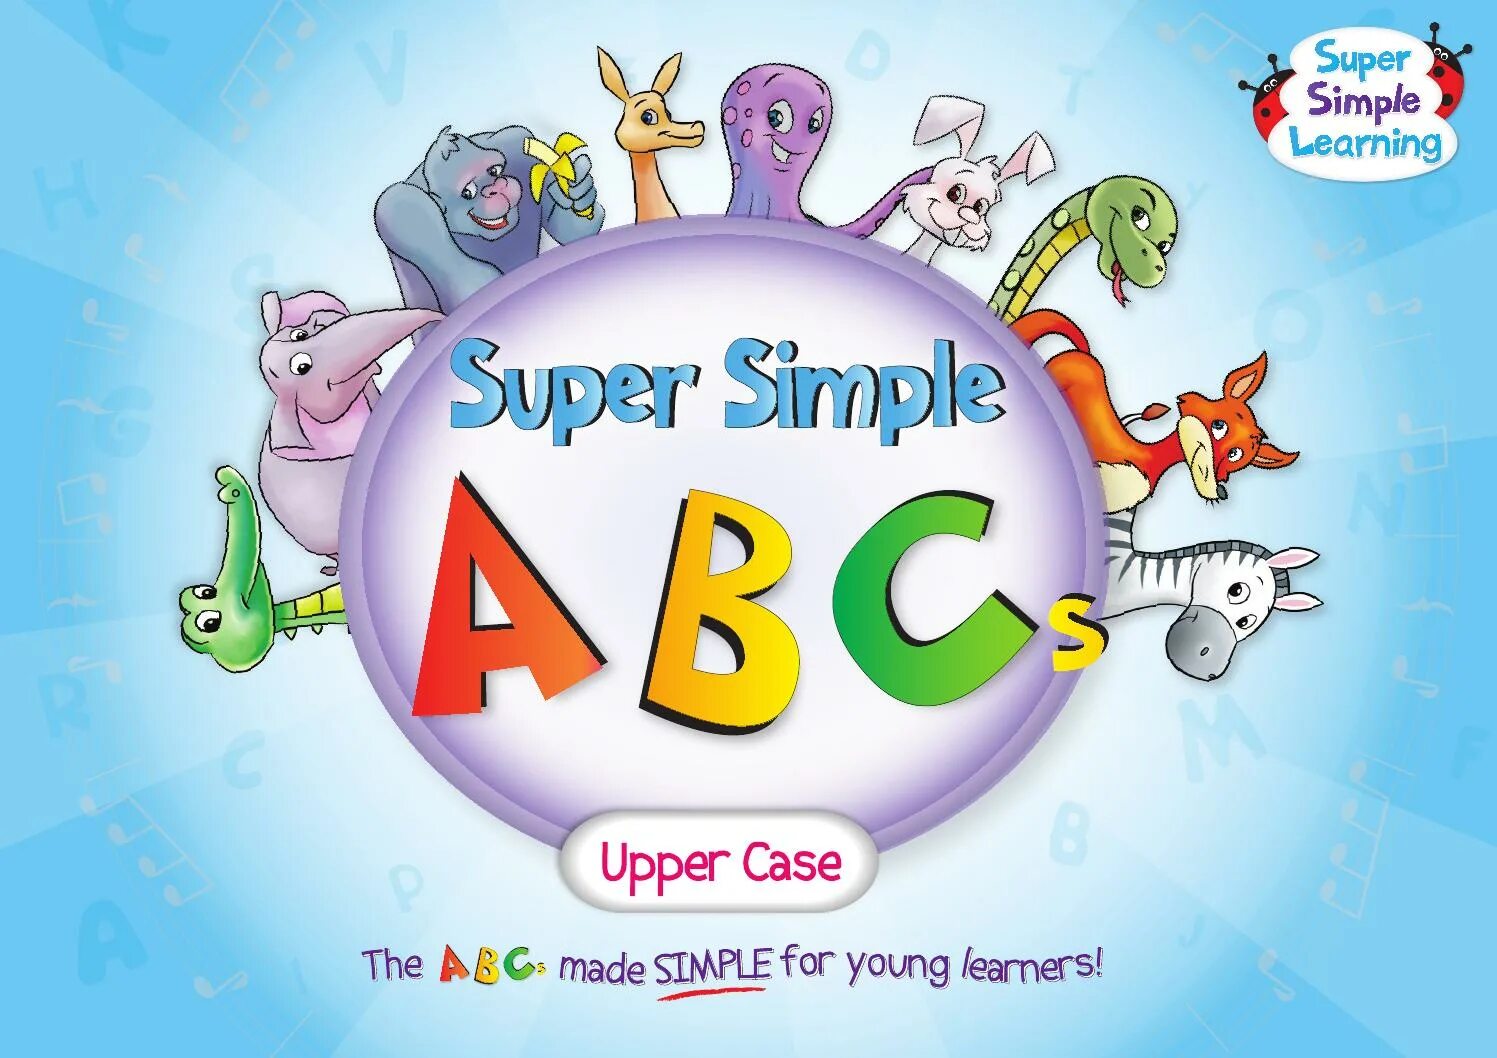 Simply learn. Супер Симпл Сонгс. Super simple ABC. ABC Song for Kids super simple. Super simple Songs.